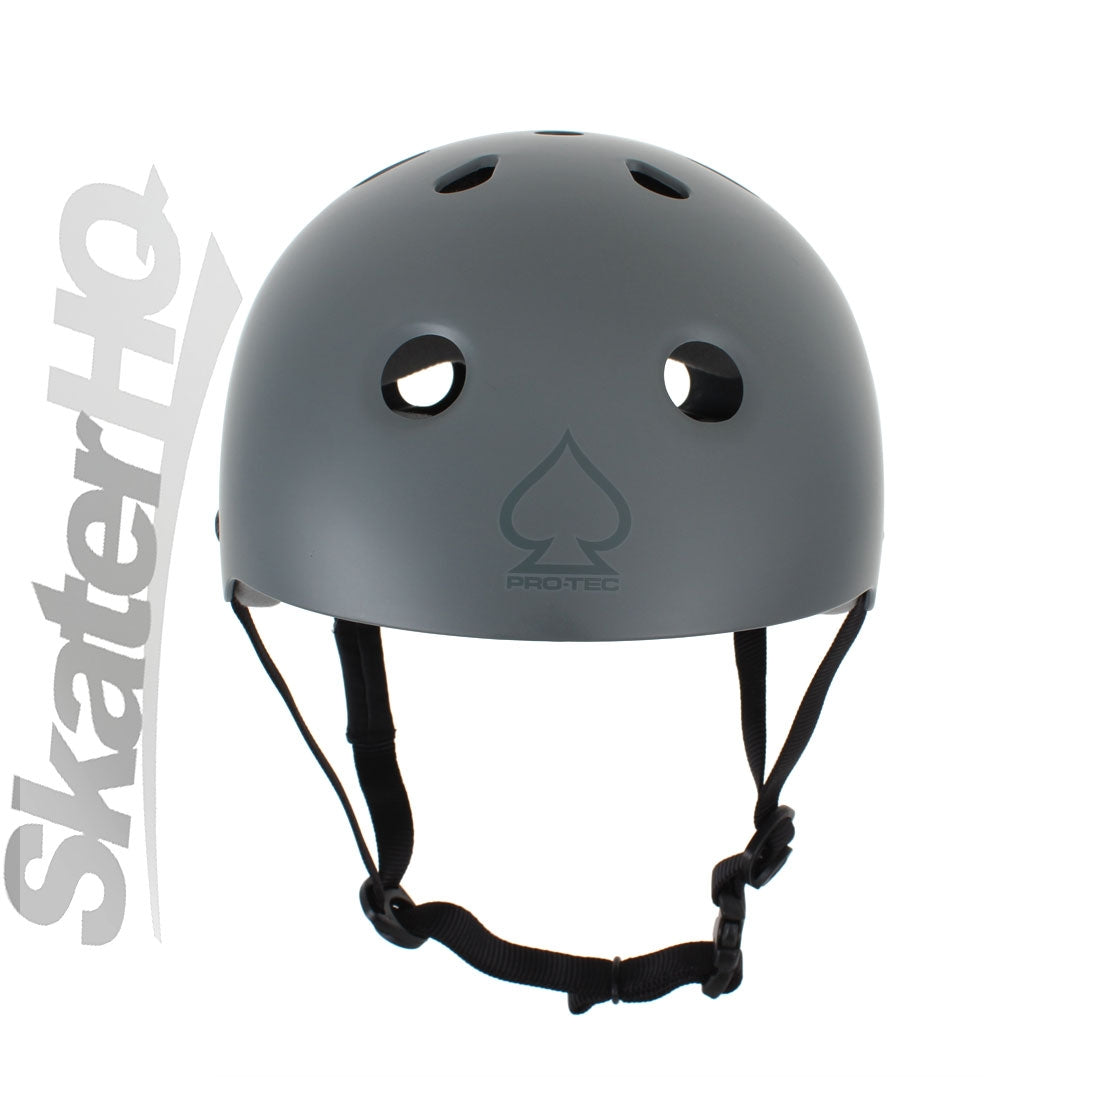 Pro-Tec Classic Skate Matte Grey - Small Helmets